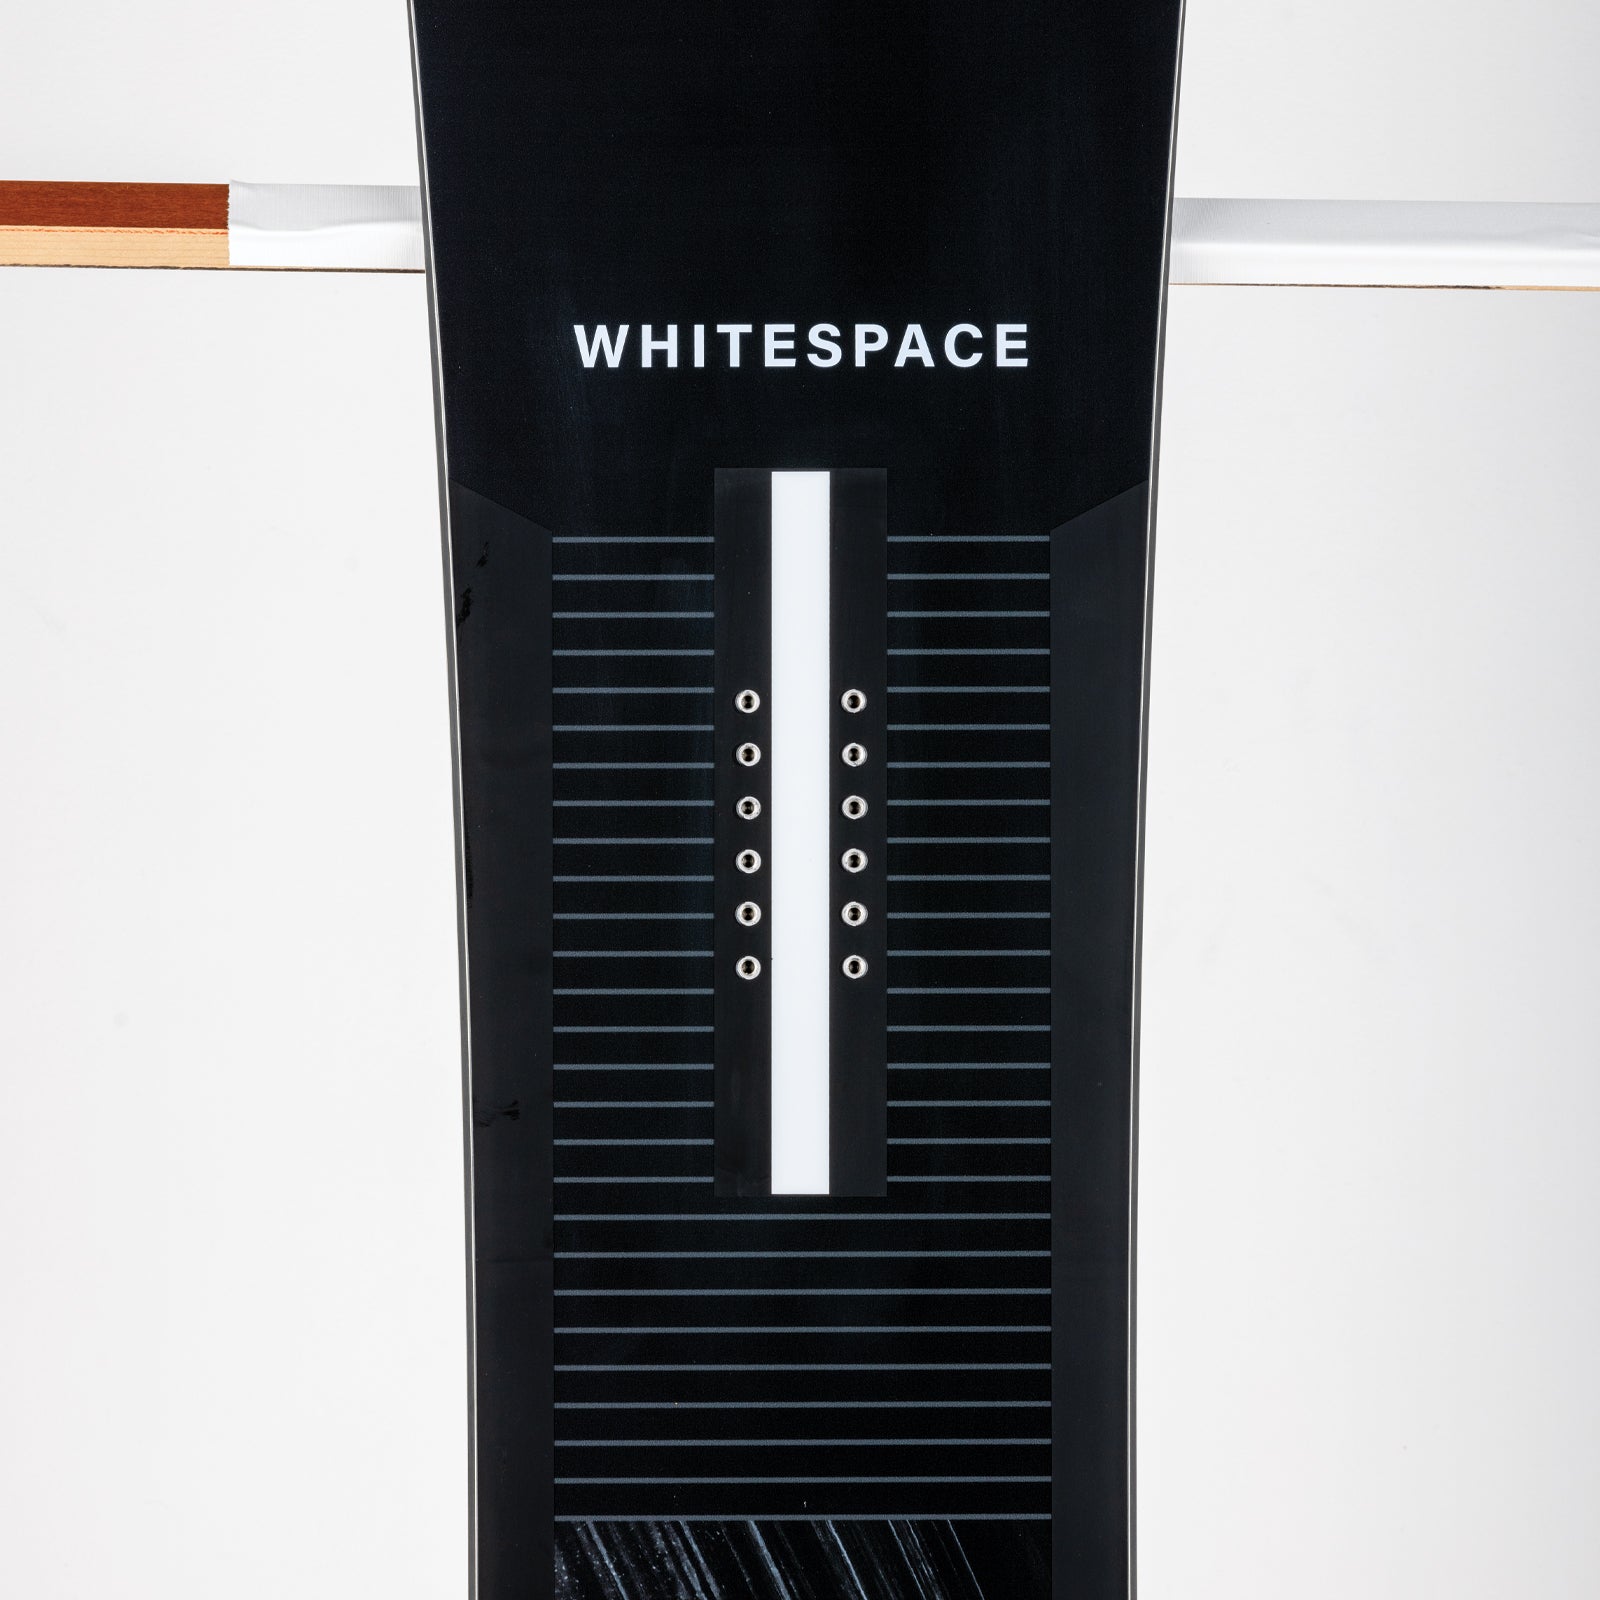 Whitespace Shaun White Pro Board Overview 